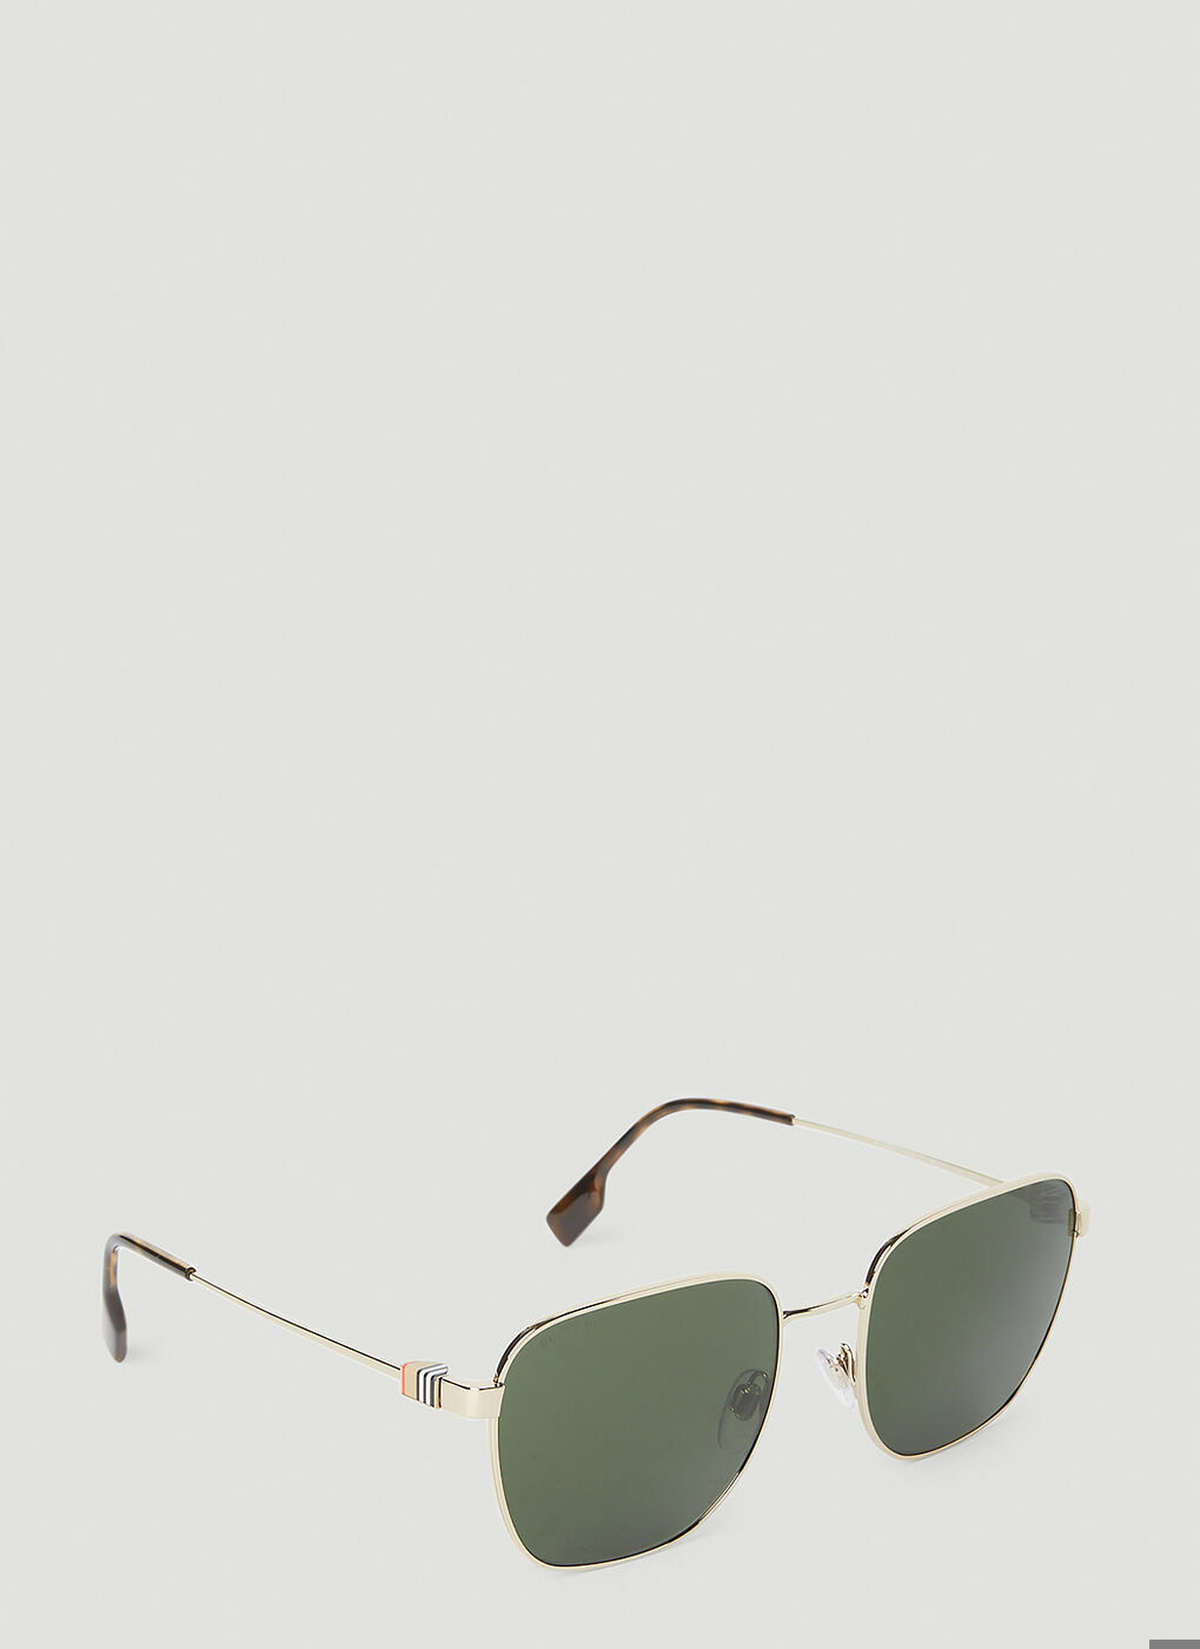 Burberry - Drew Sunglasses in Gold Burberry